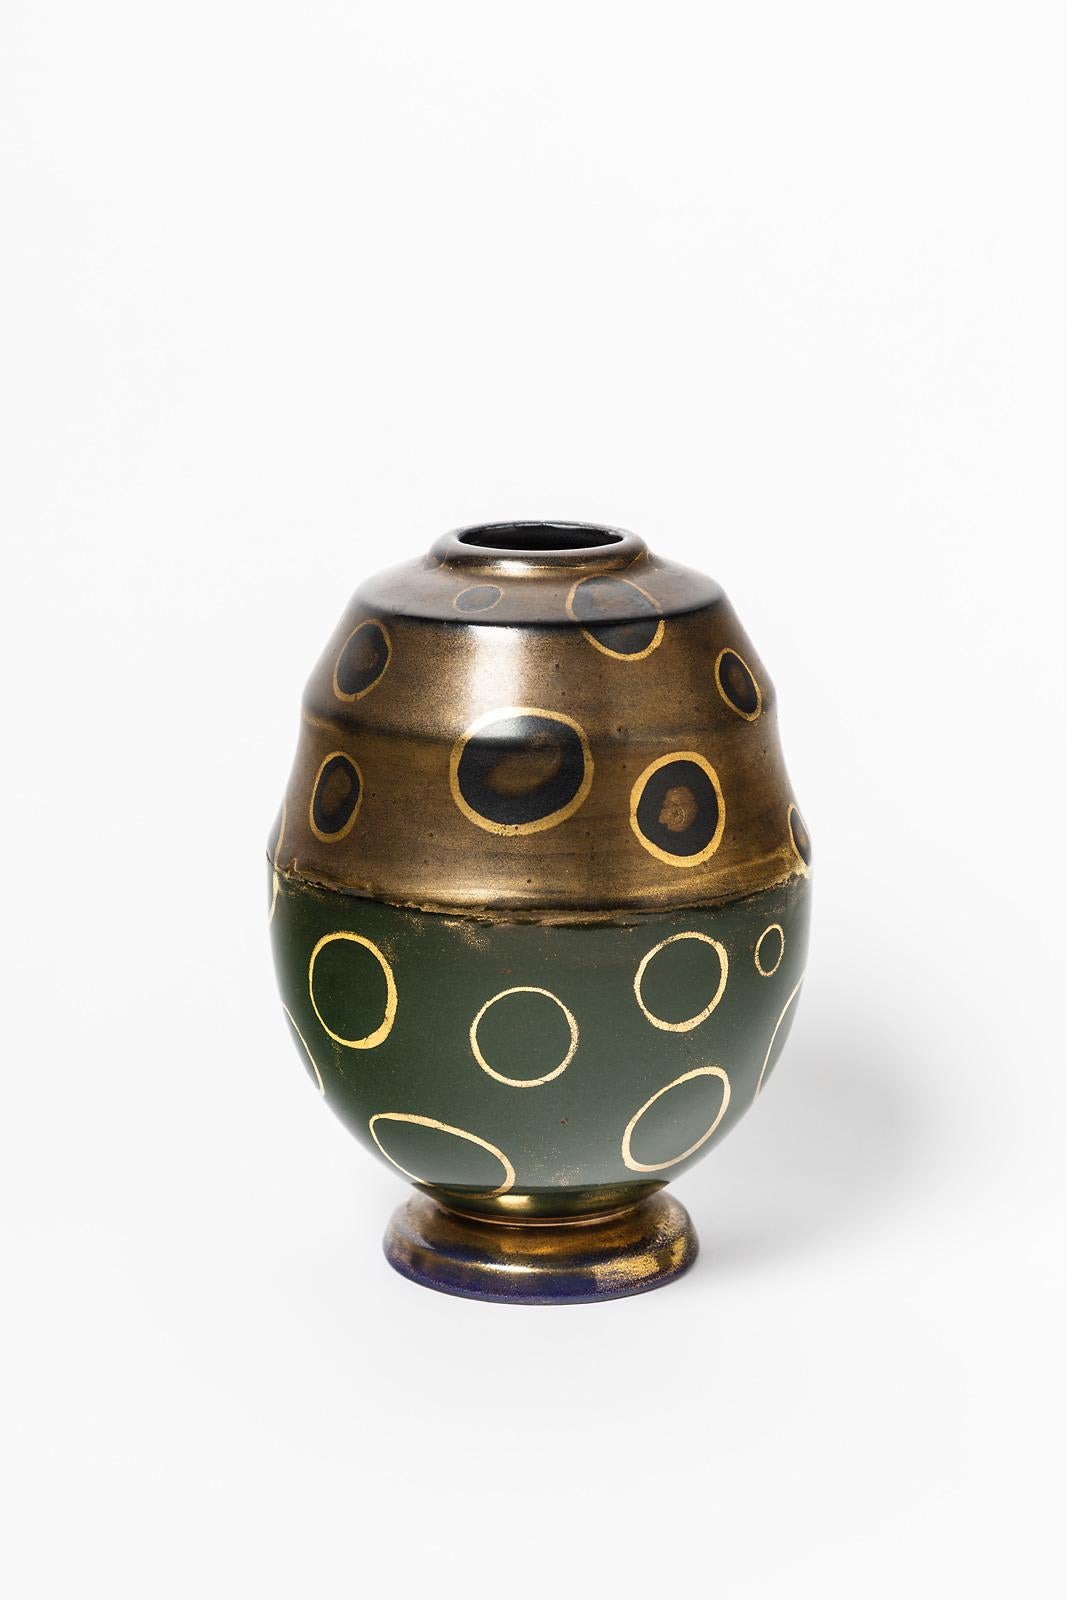 French Lucien Brisdoux Art Deco Green and Gold Ceramic Vase, circa 1930, Signed